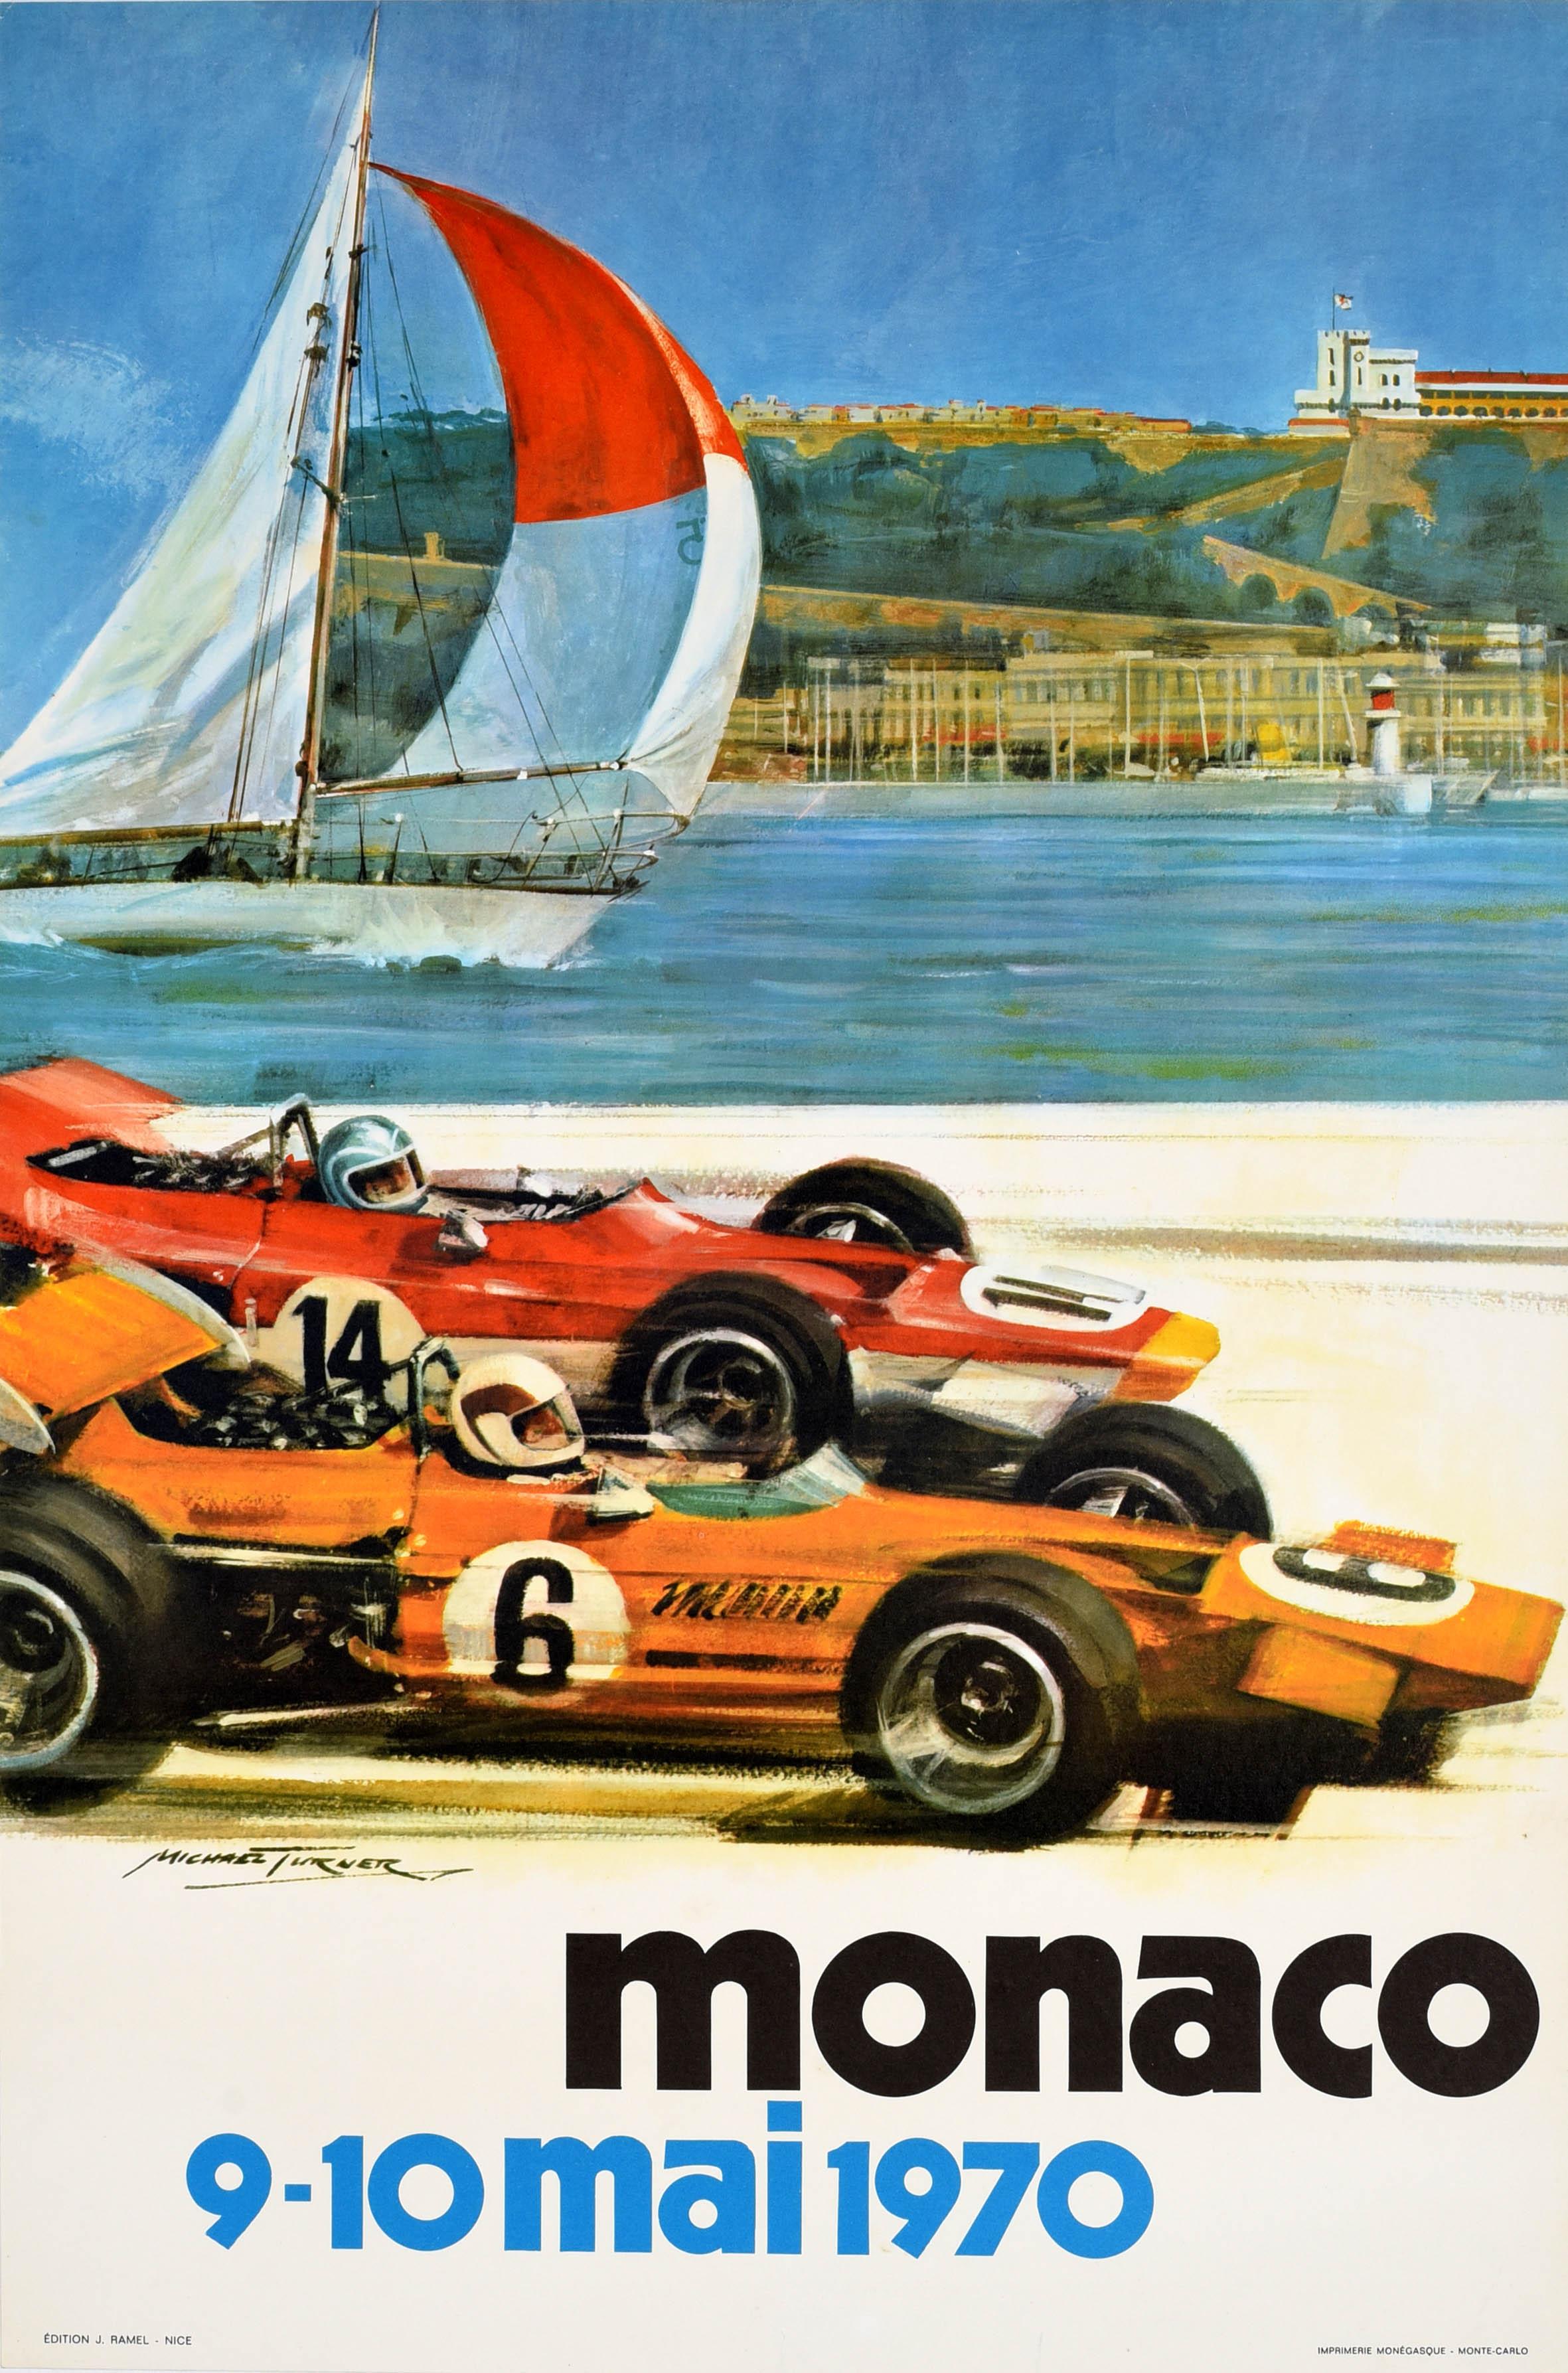 Michael Turner Print - Original Vintage Motorsport Poster Monaco Grand Prix 1970 Formula 1 Race Sailing